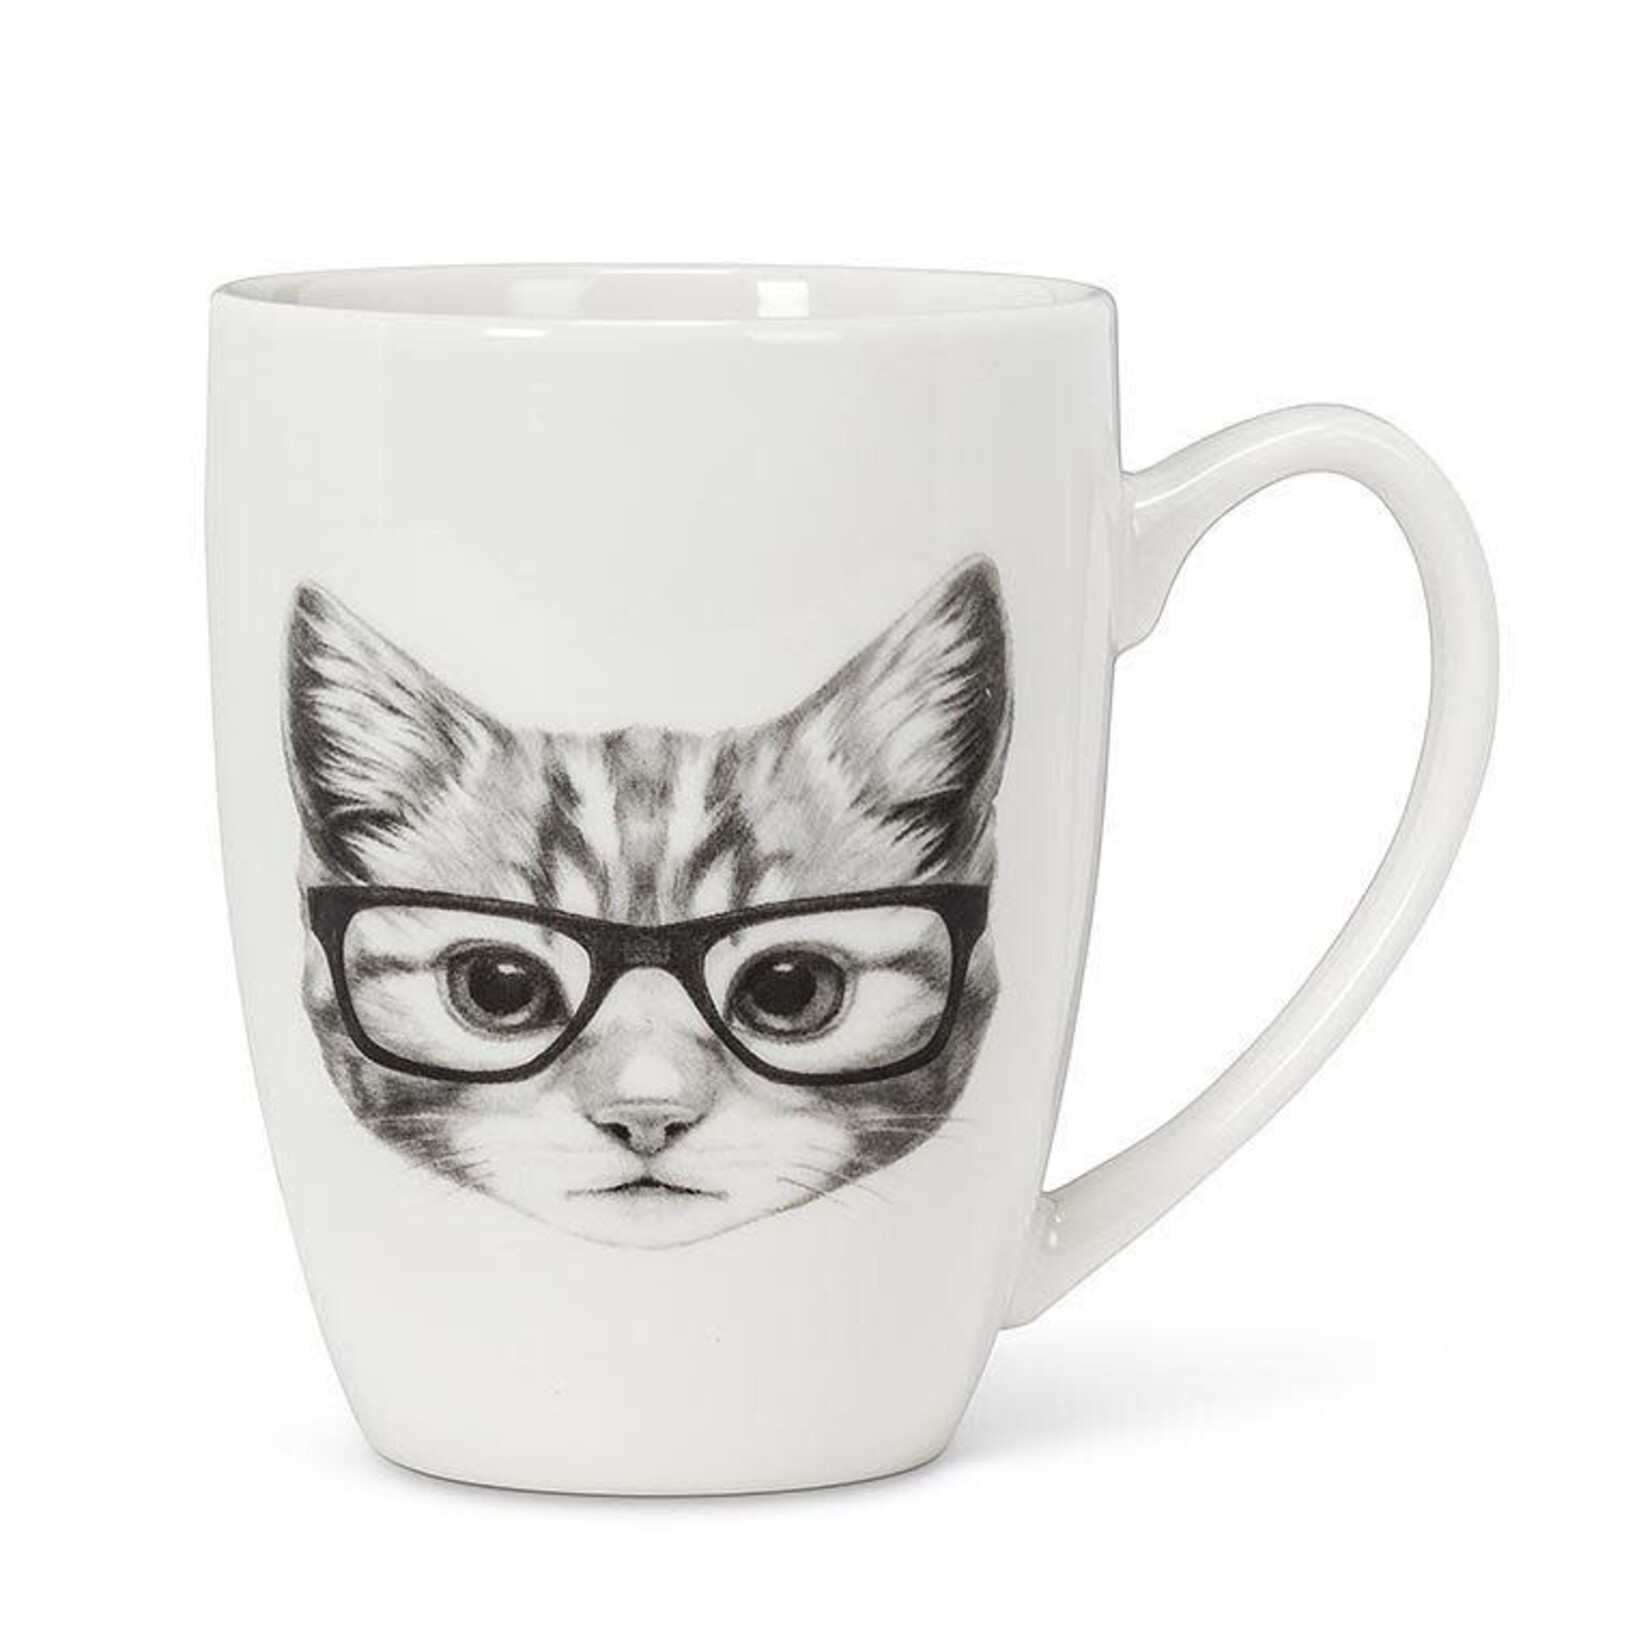 Cat With Glasses Mug - 12oz